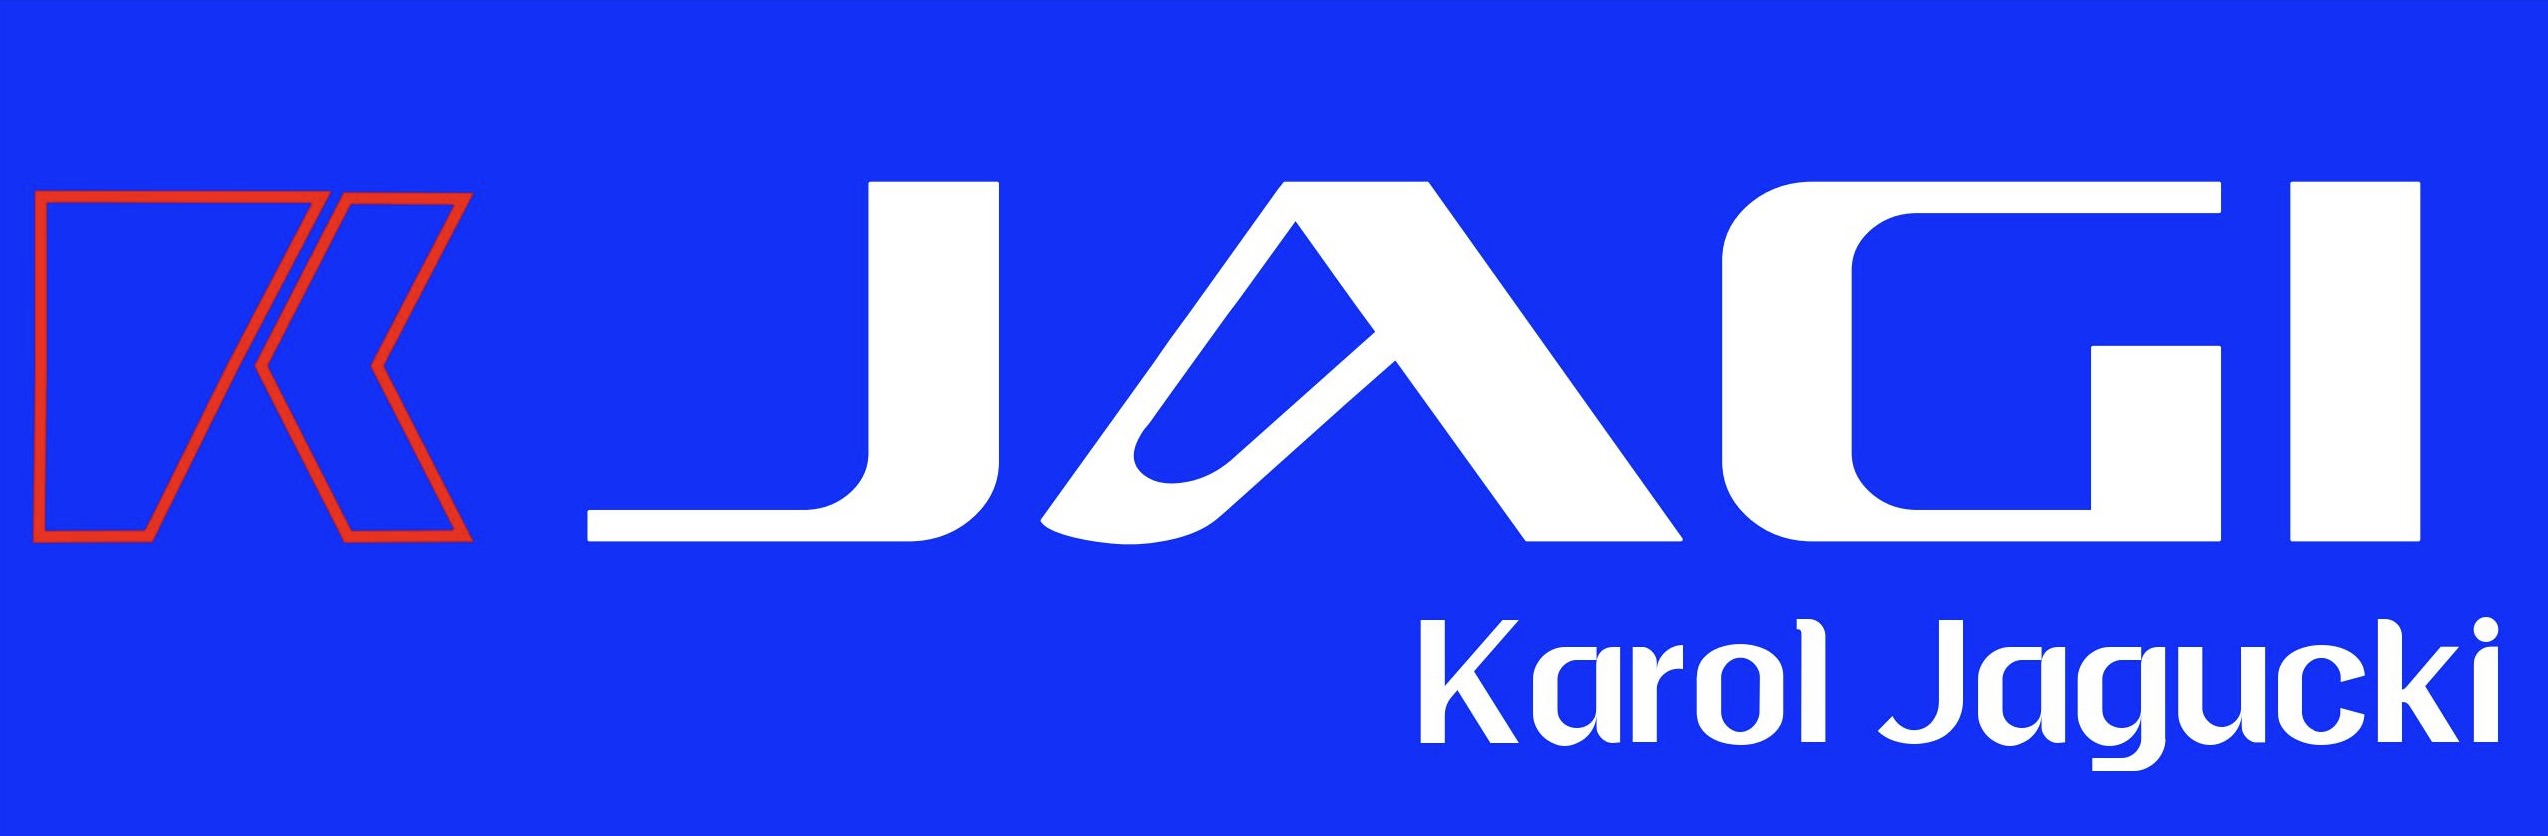 Jagi Karol Jagucki Logo